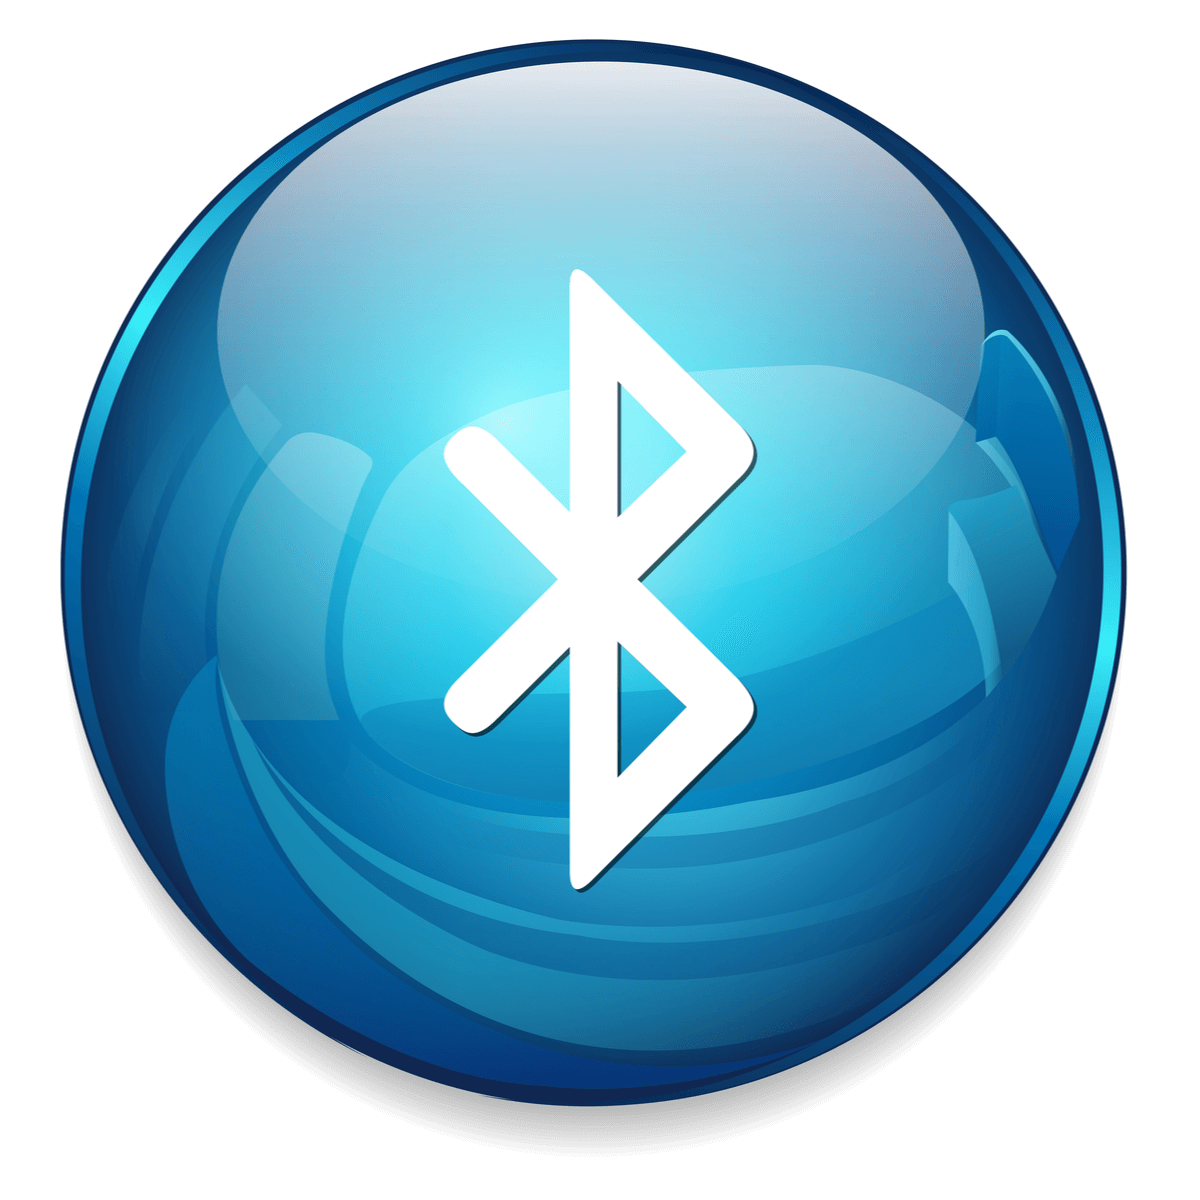 fix Error establishing connection with Bluetooth